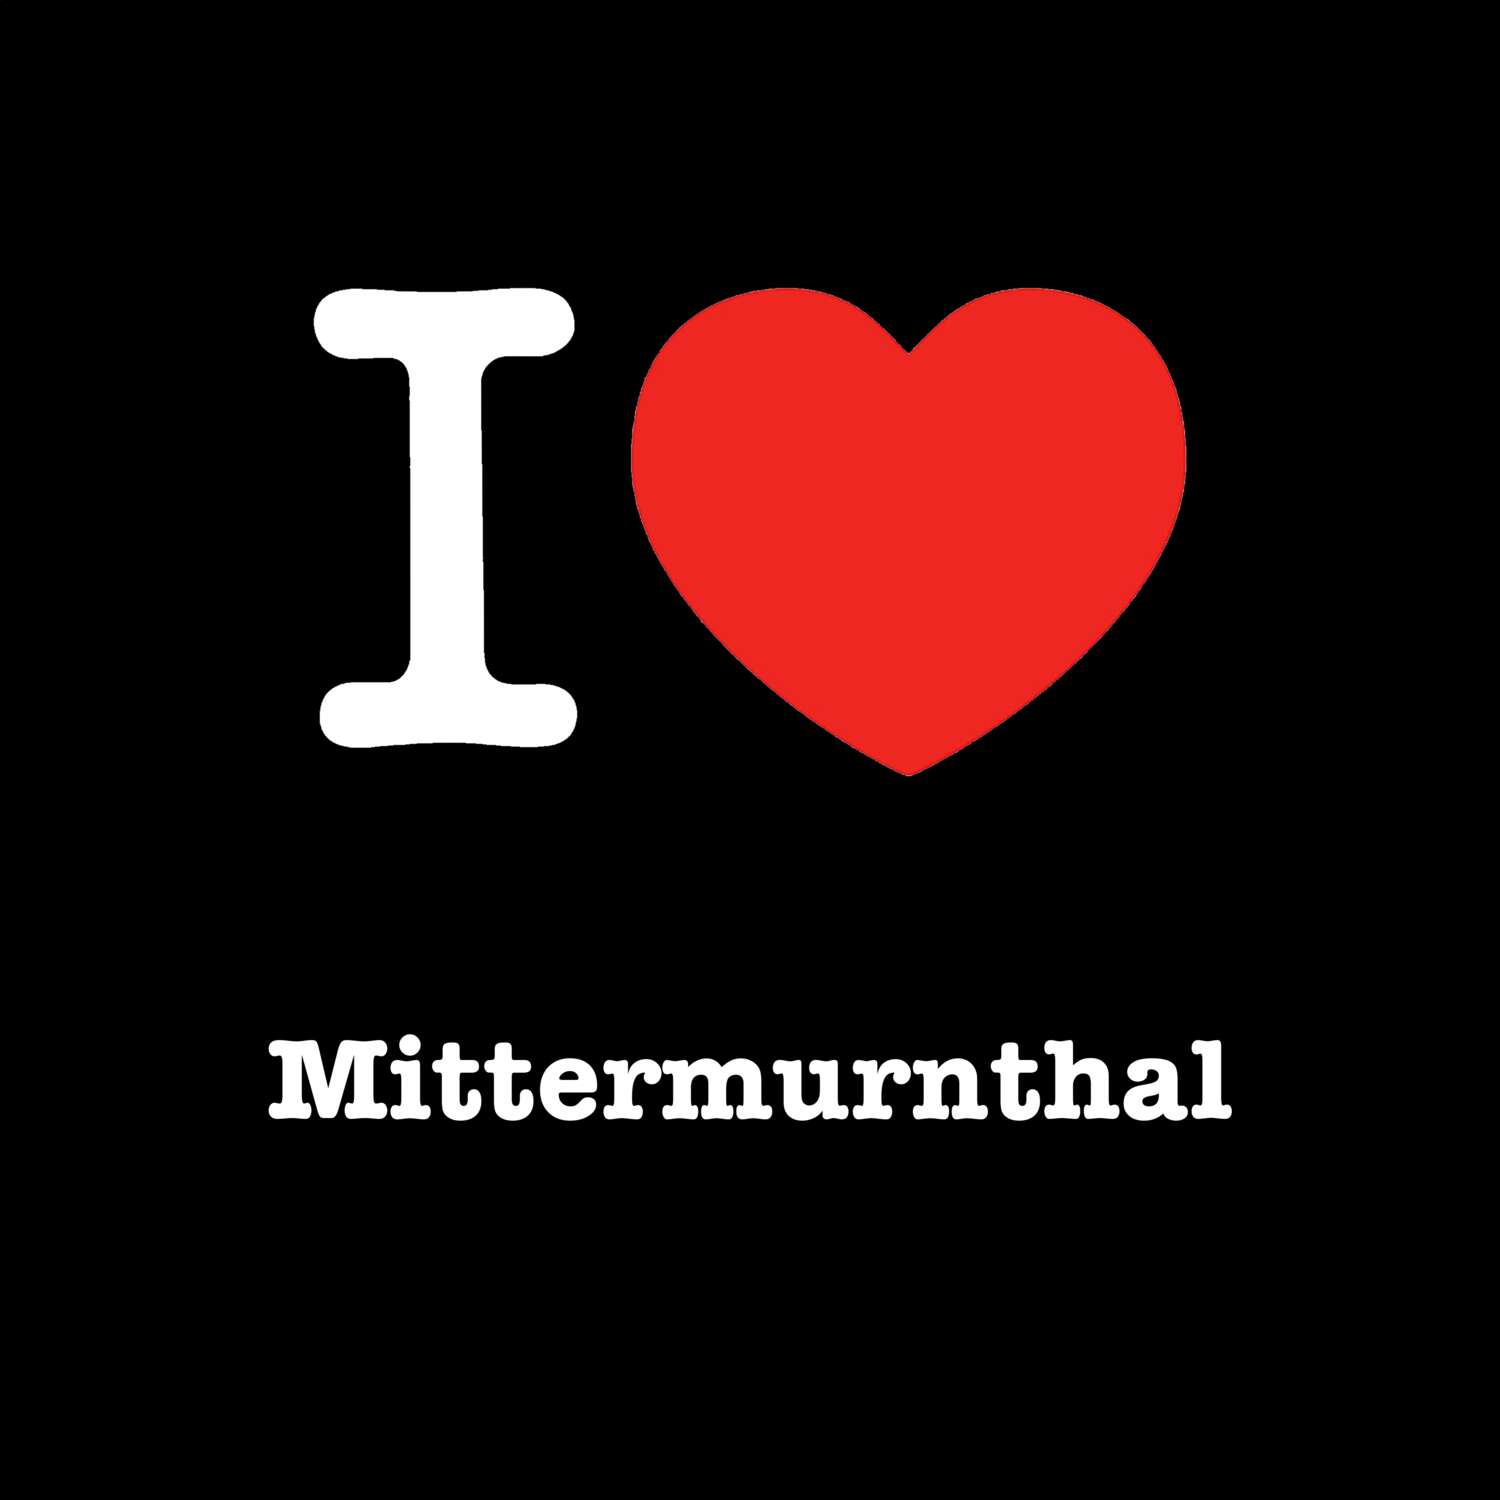 Mittermurnthal T-Shirt »I love«